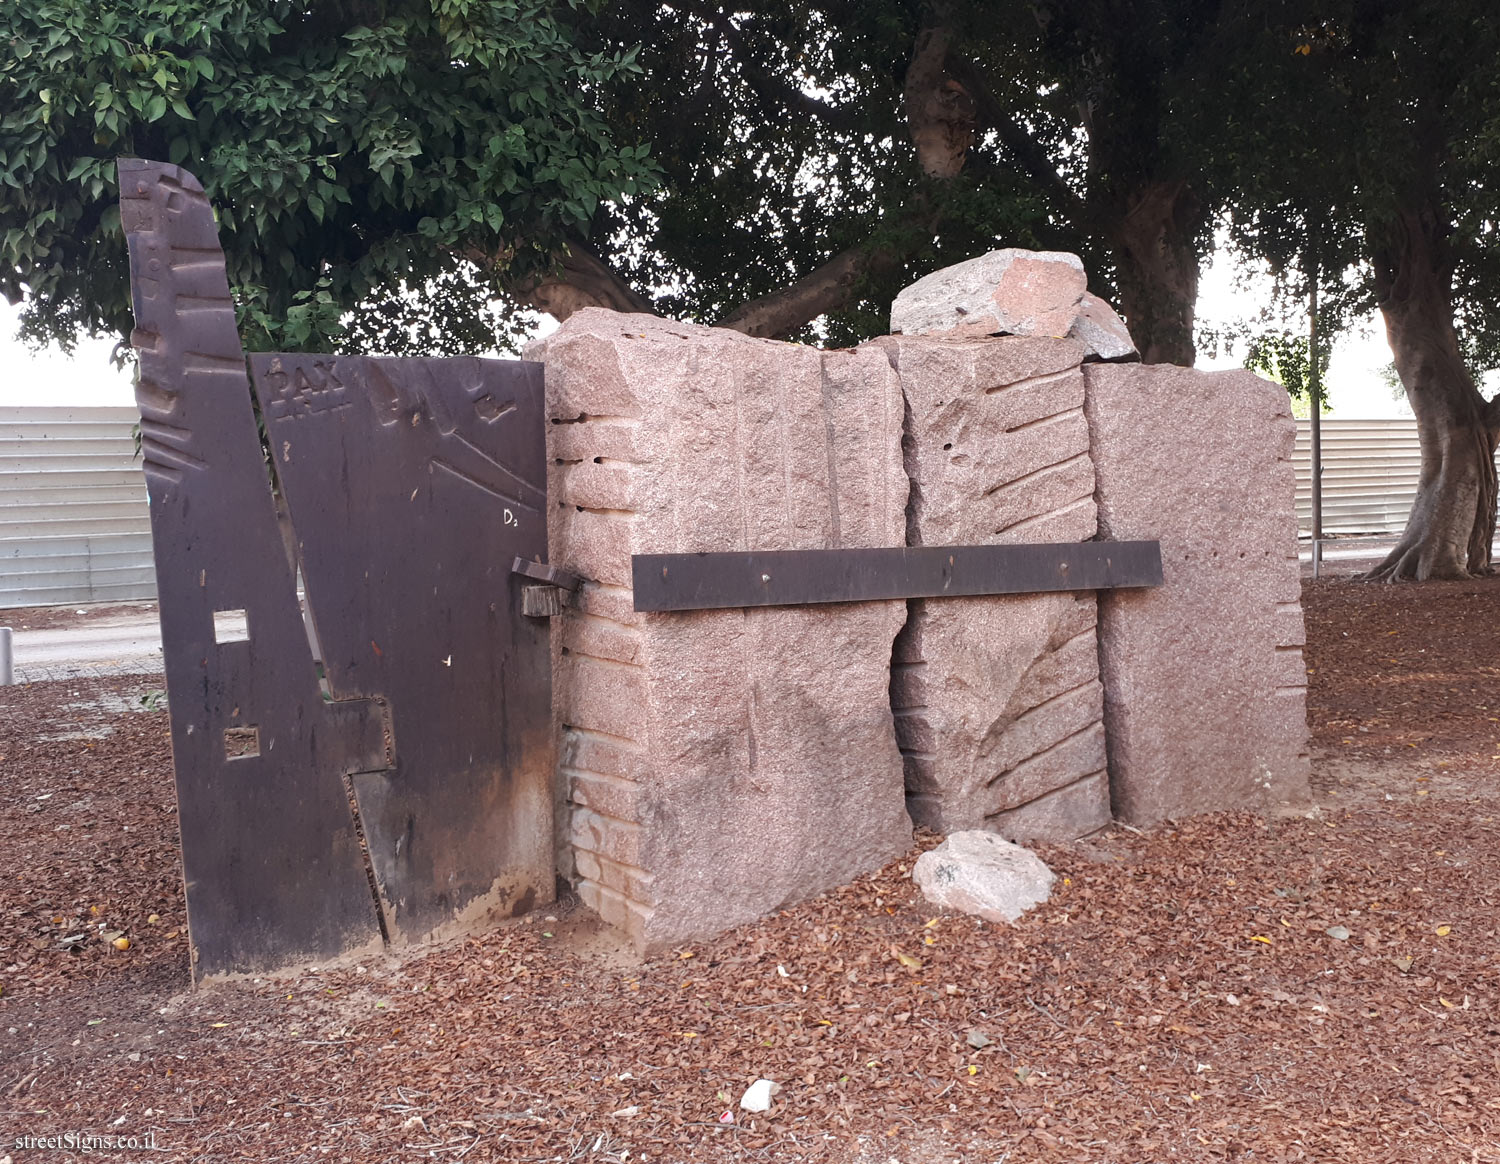 Tel Aviv - Tomarkin sculptures at Abu Nabot Park - Locked